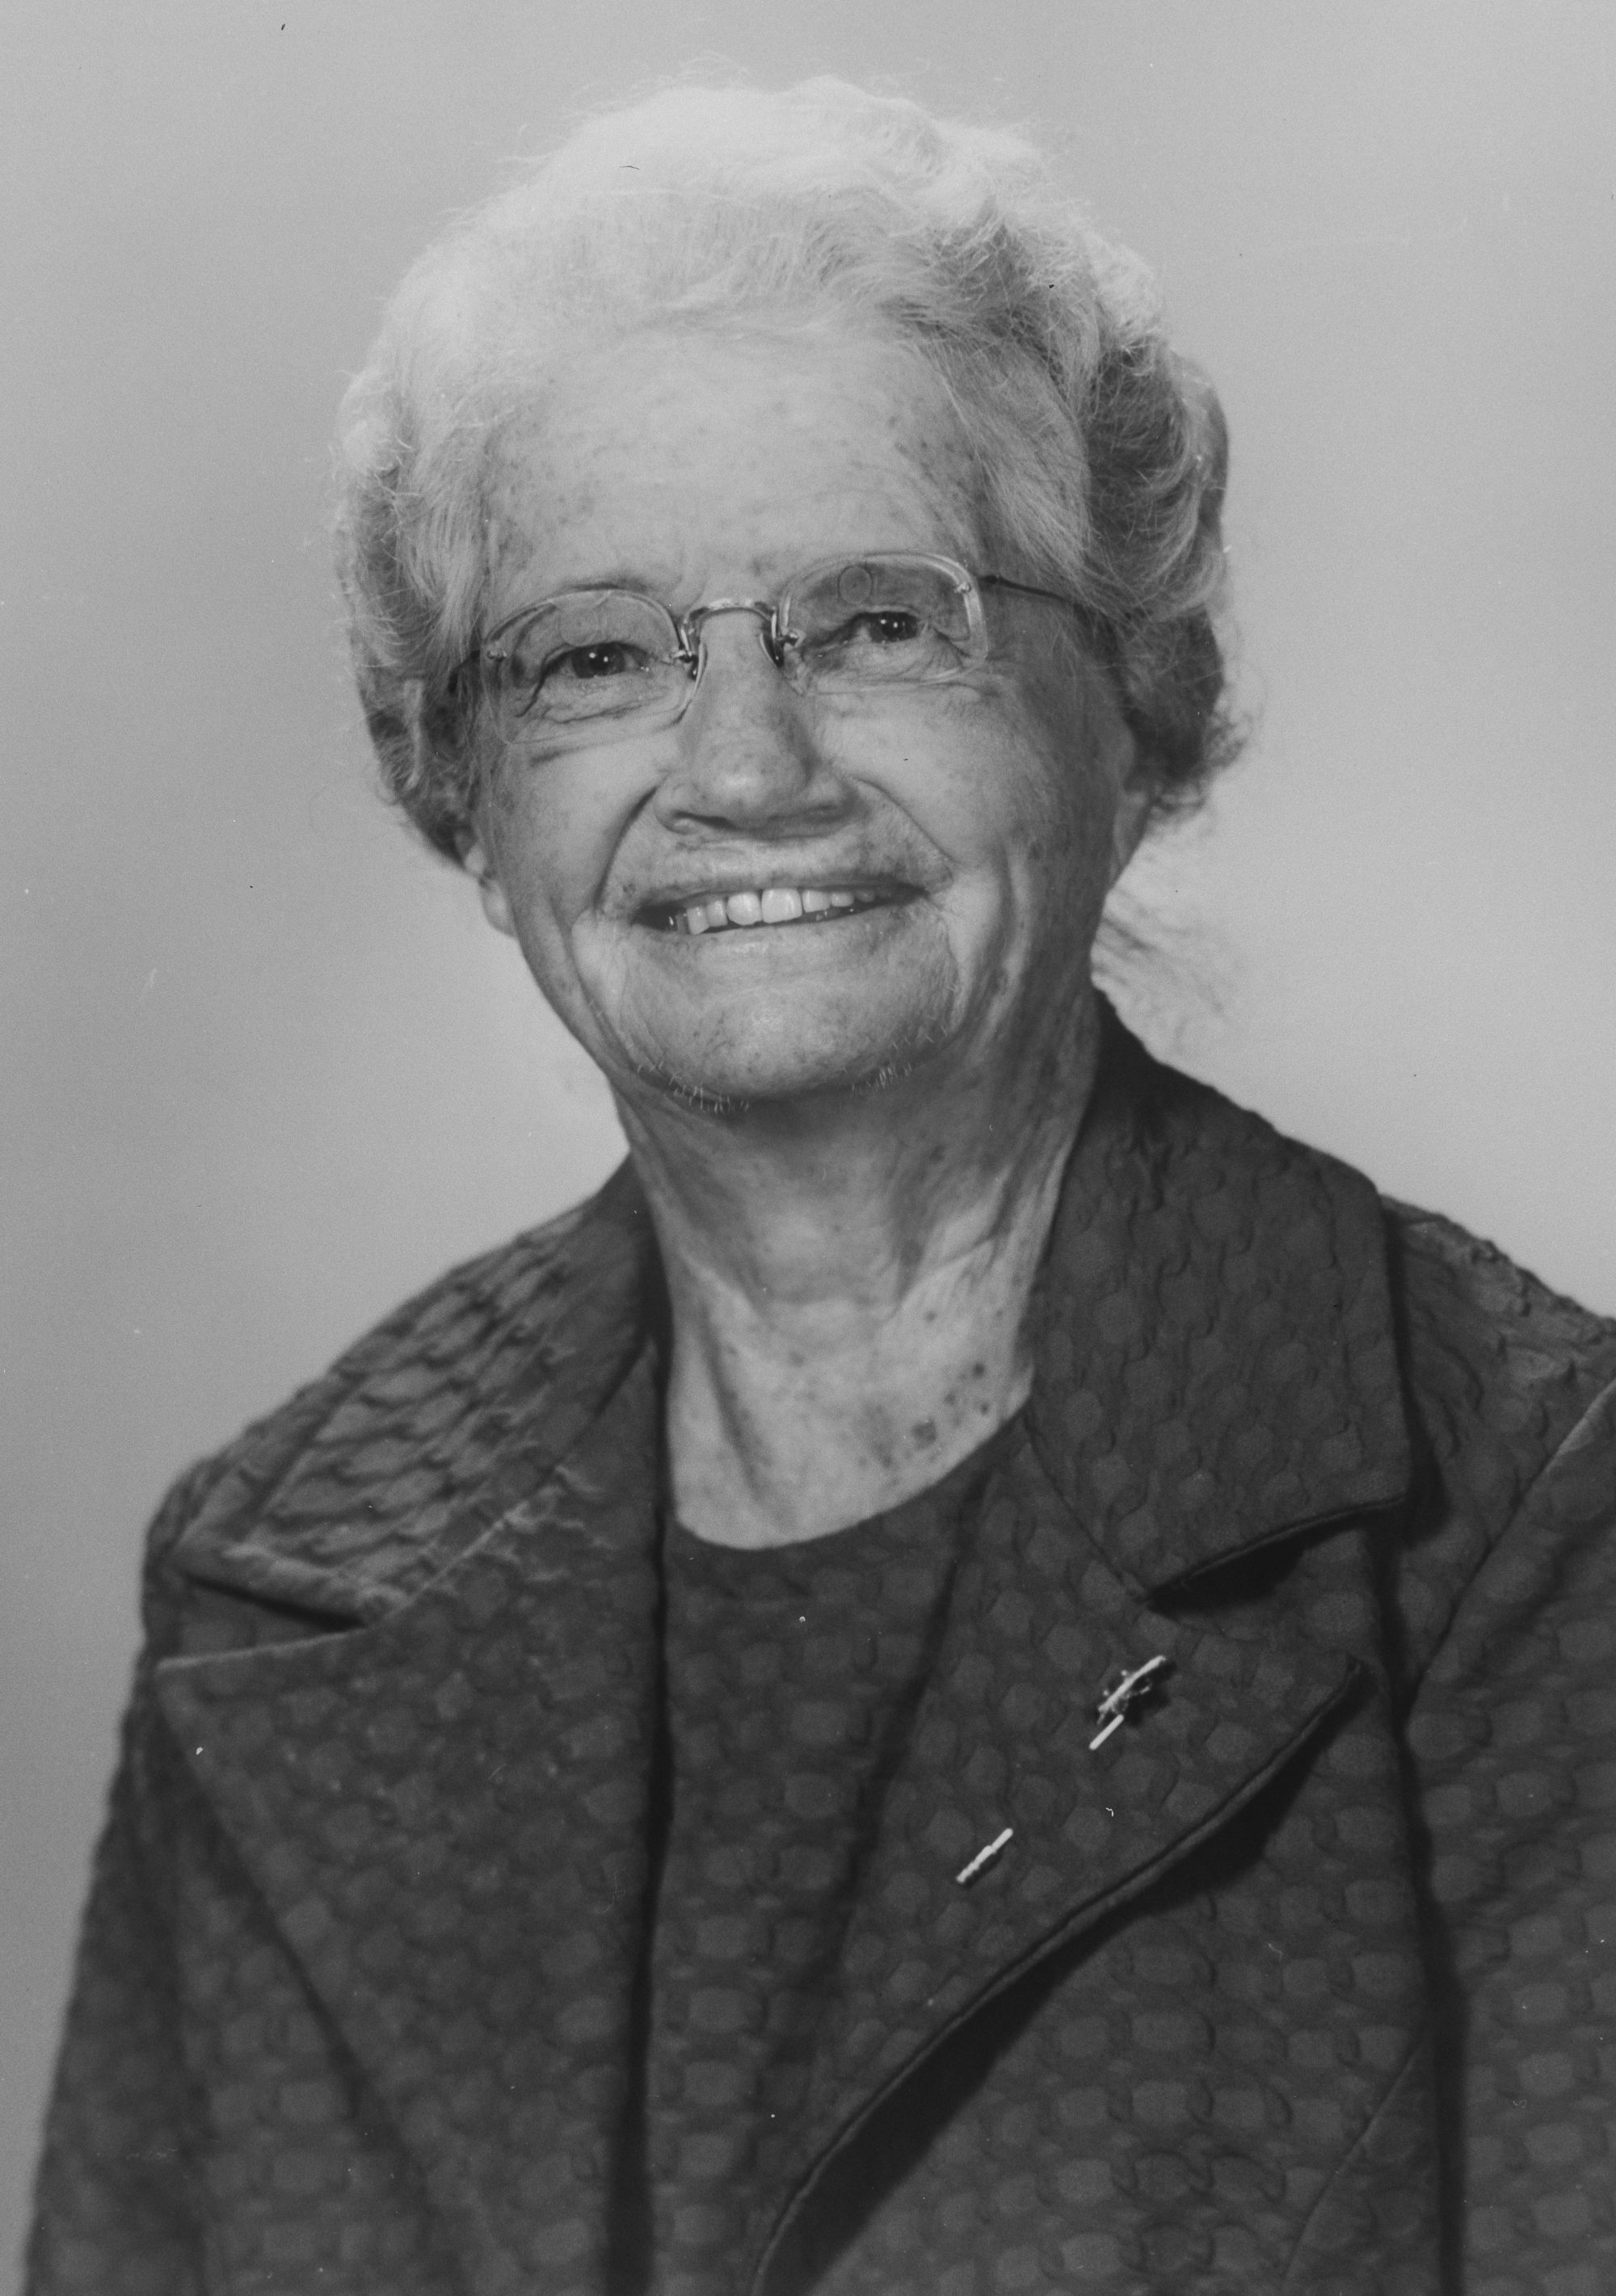 Bertha Smith